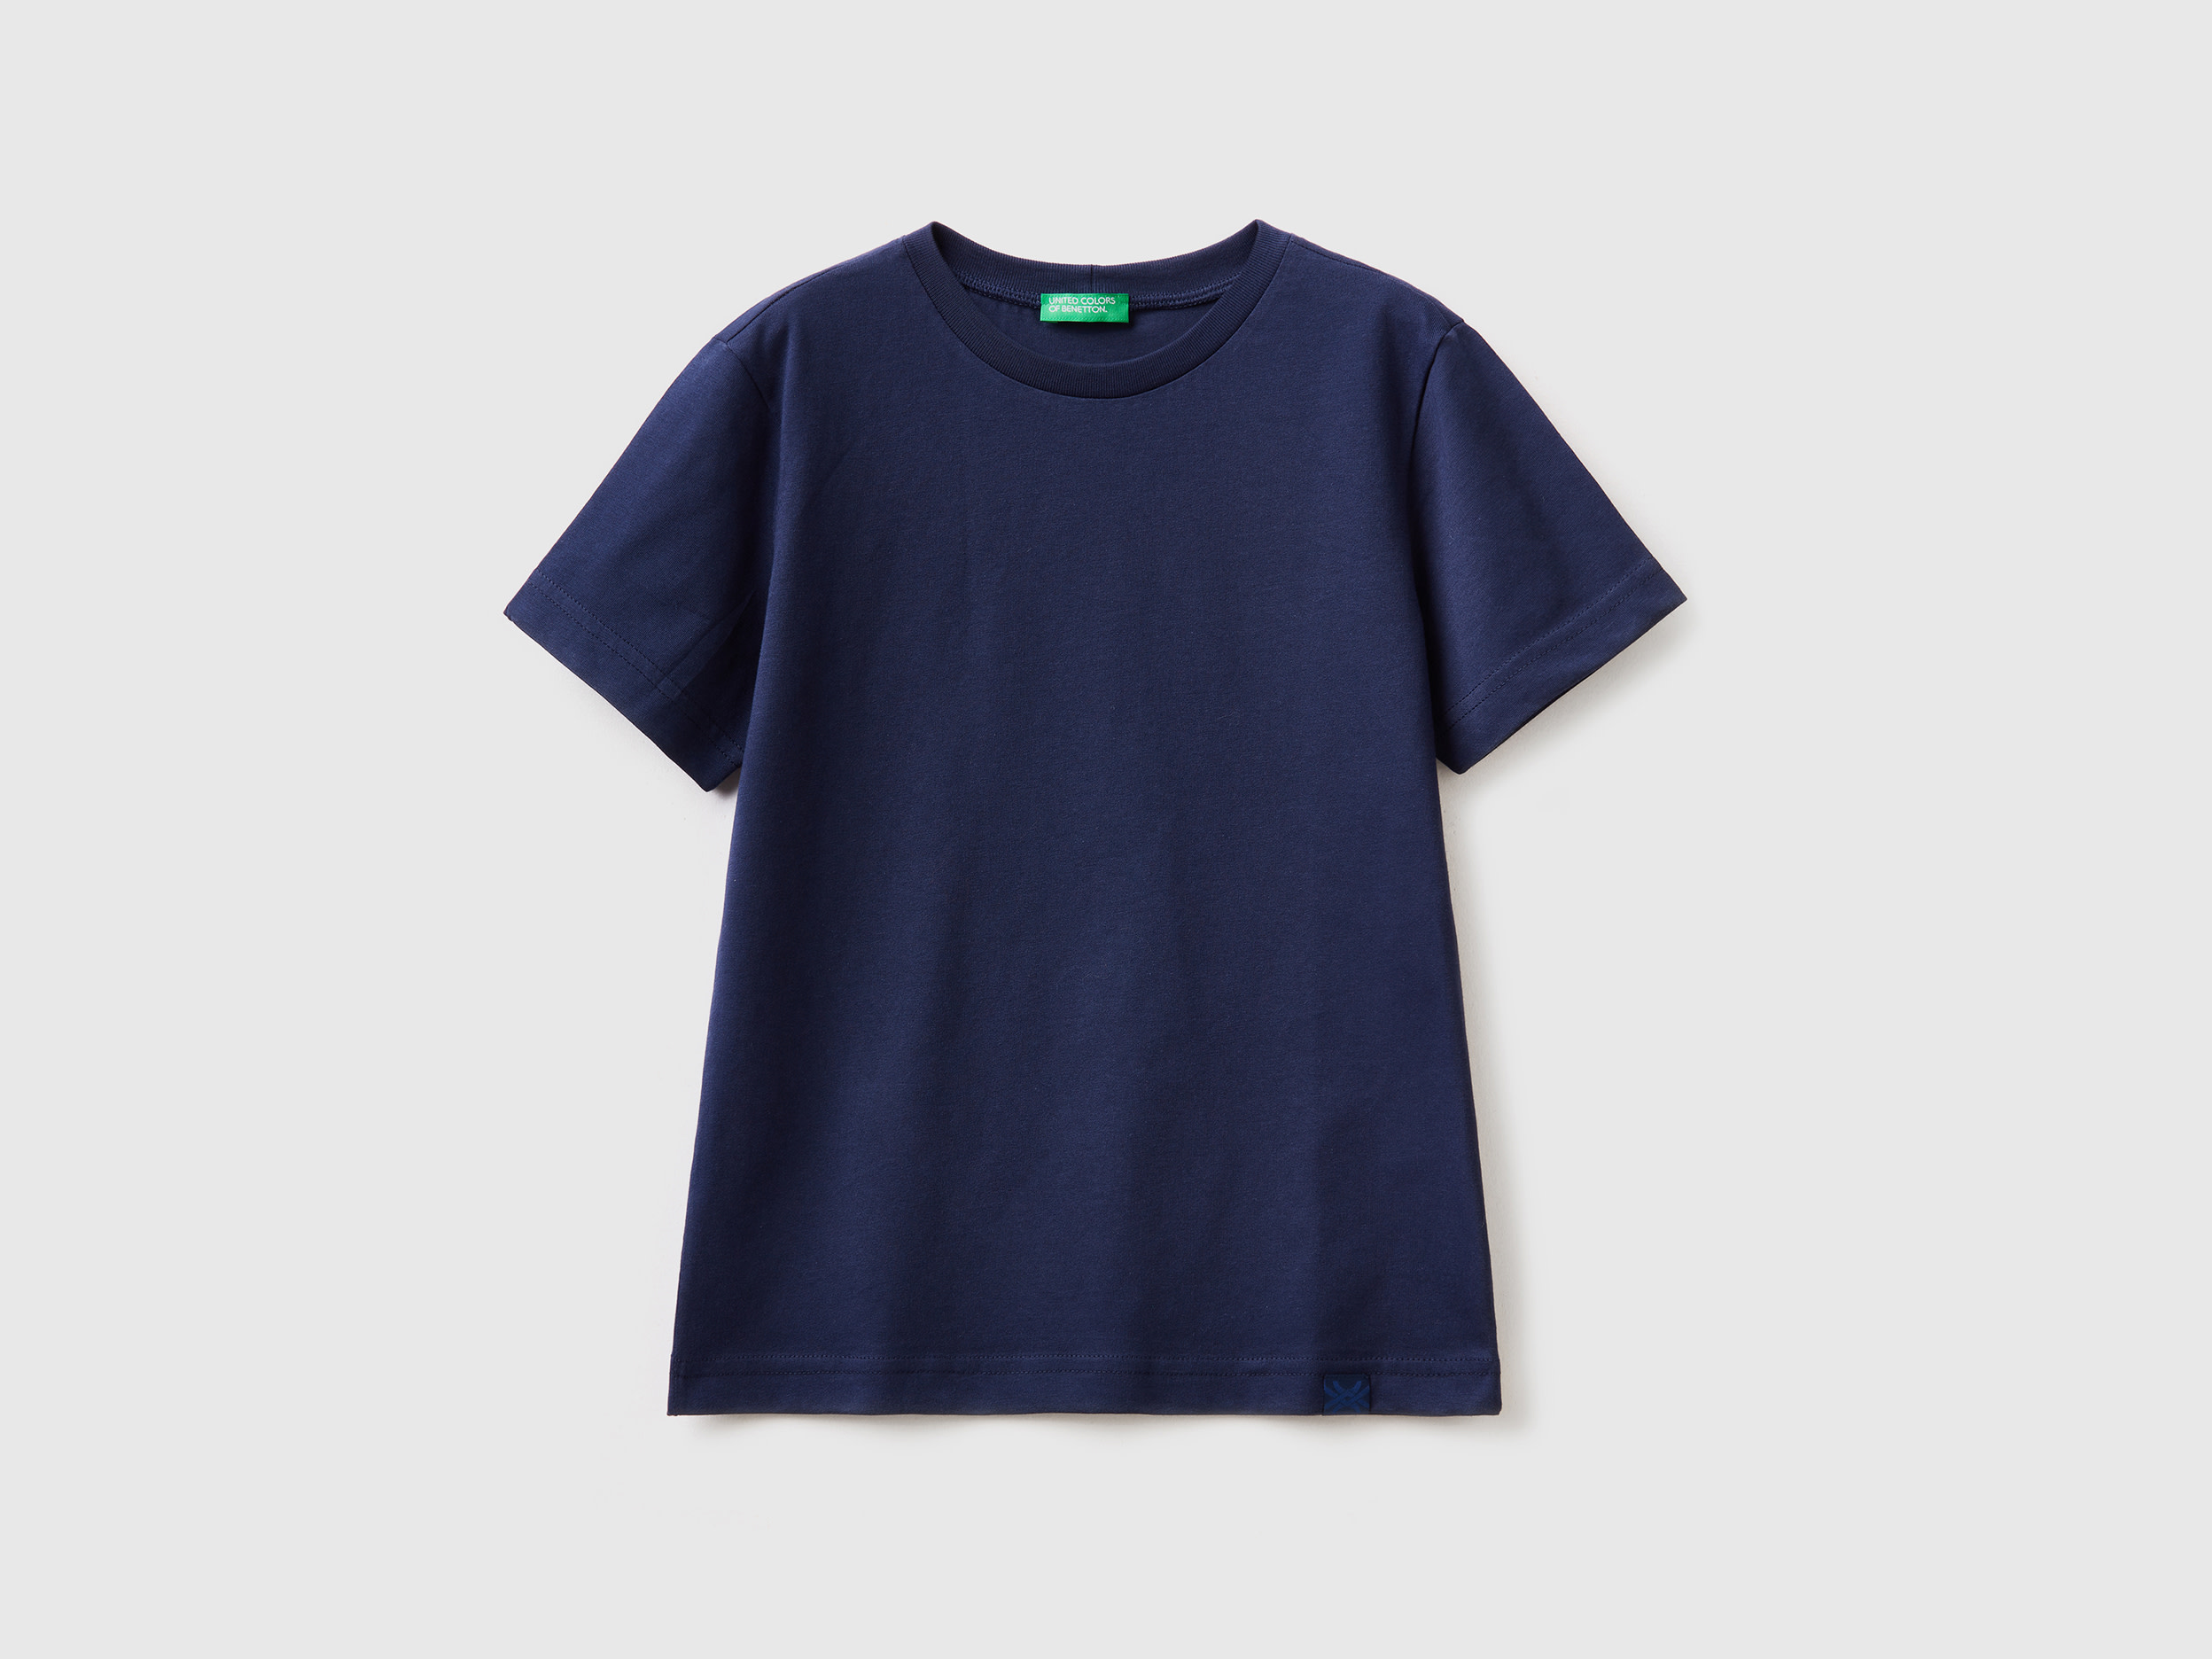 Image of Benetton, Organic Cotton T-shirt, size L, Dark Blue, Kids